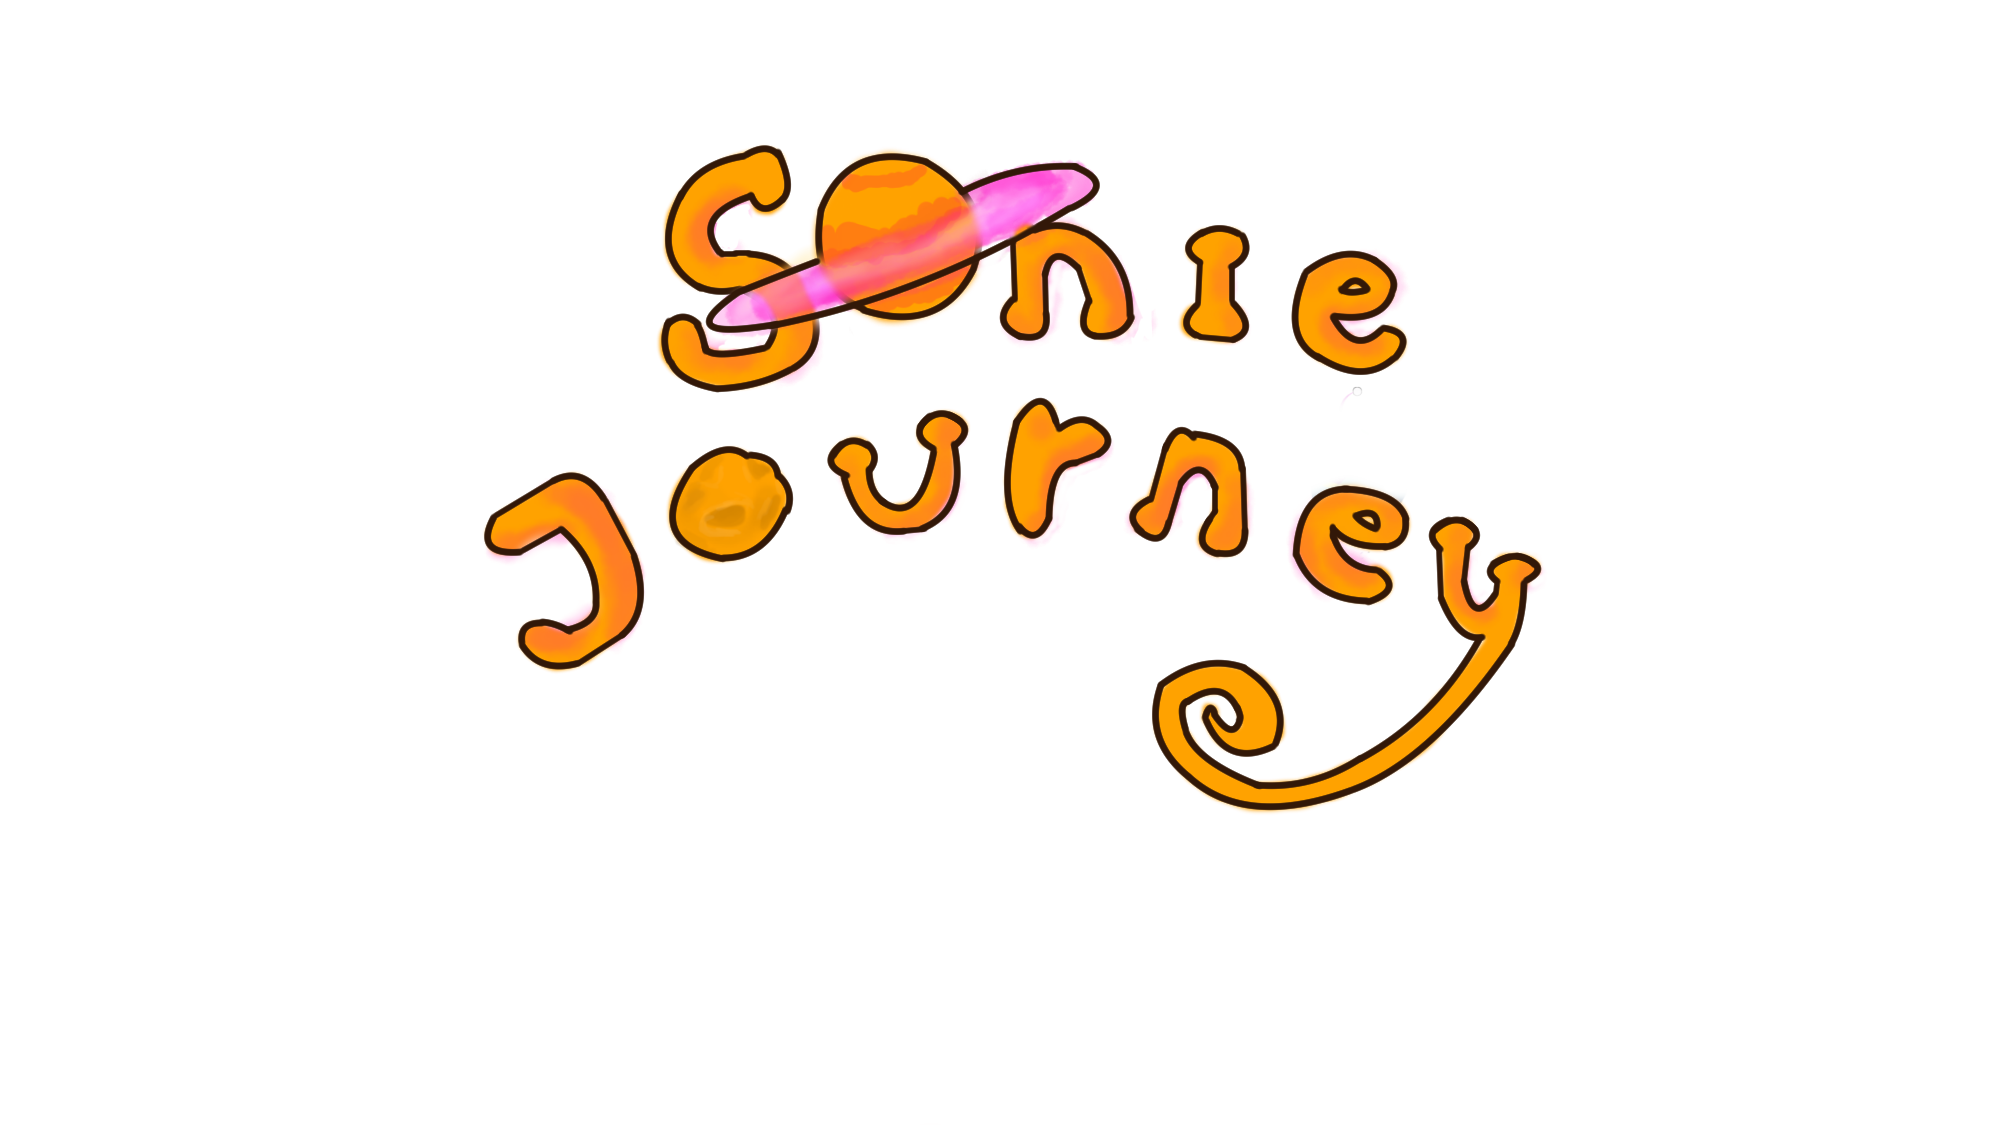 Sonie's Journey